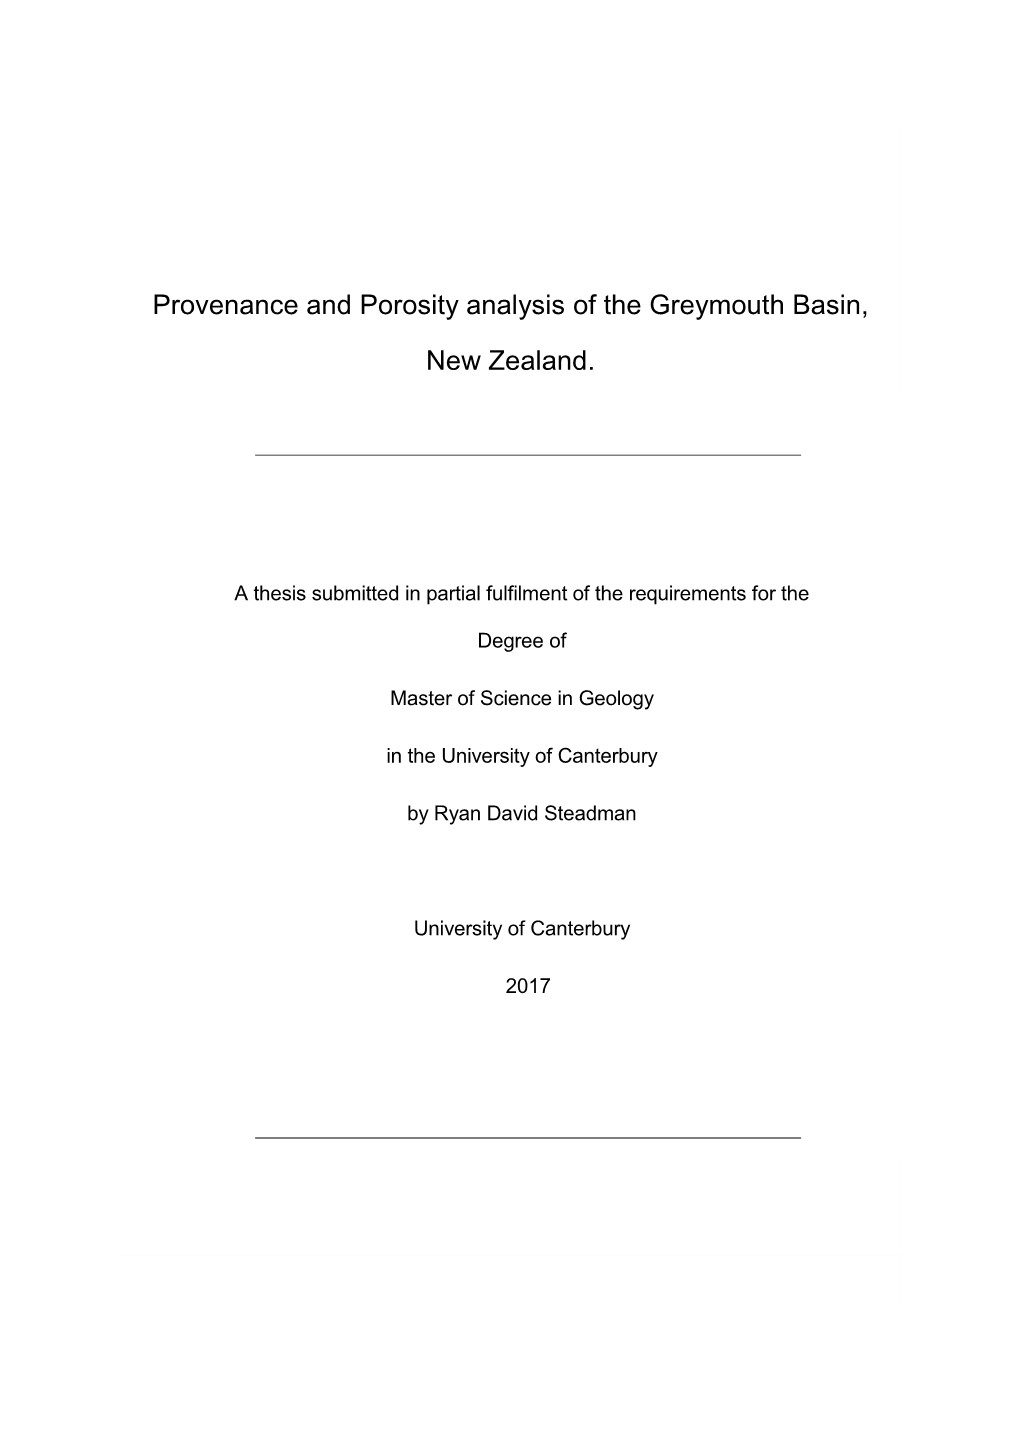 Provenance and Porosity Analysis of the Greymouth Basin, New Zealand